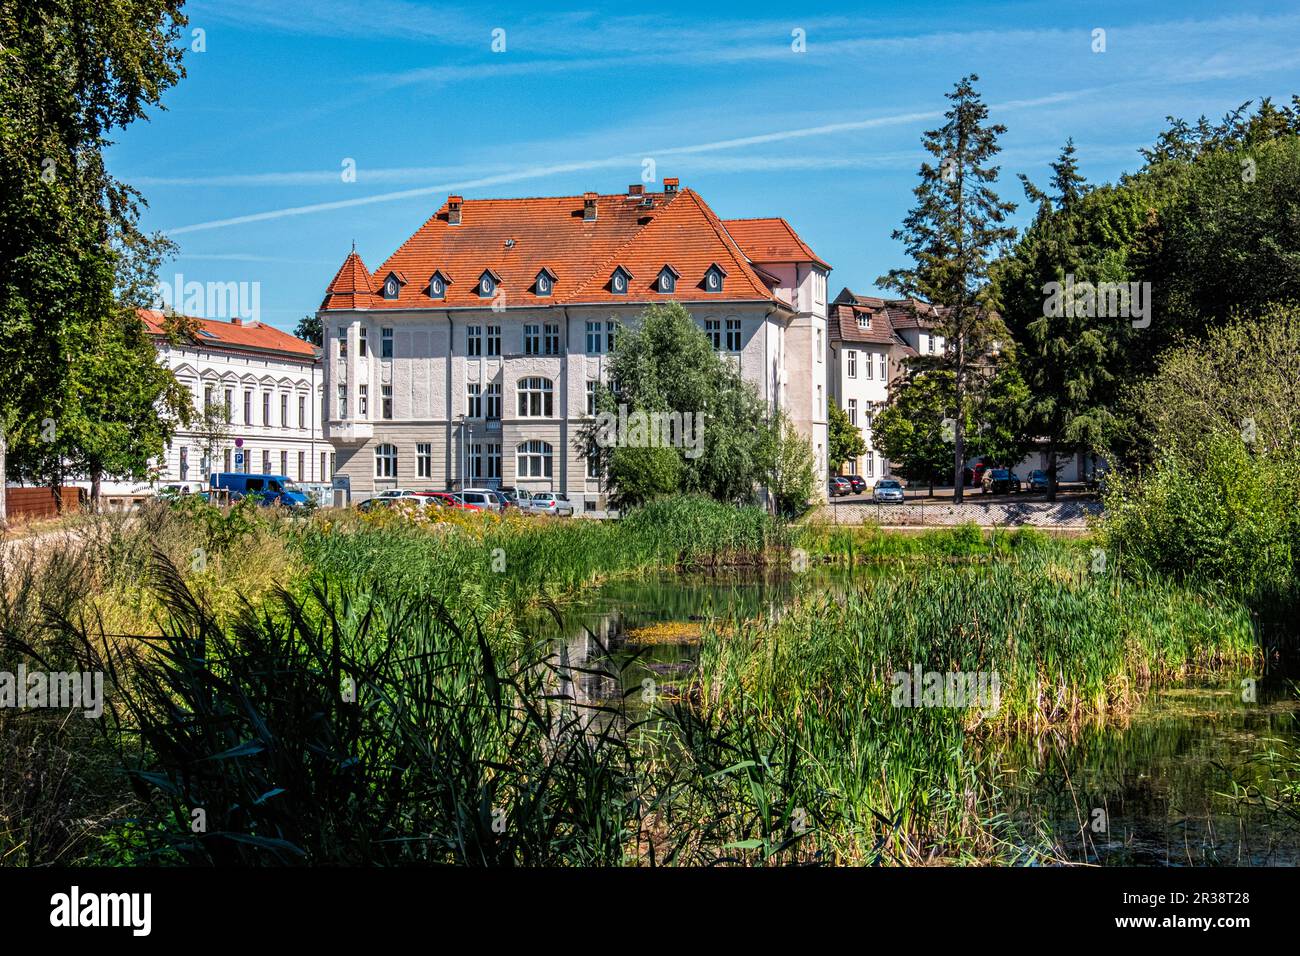 Swan pond and view of historic building in Tiergartenstraße 5, Neustrelitz, Mecklenburg-Vorpommern, Germany Stock Photo